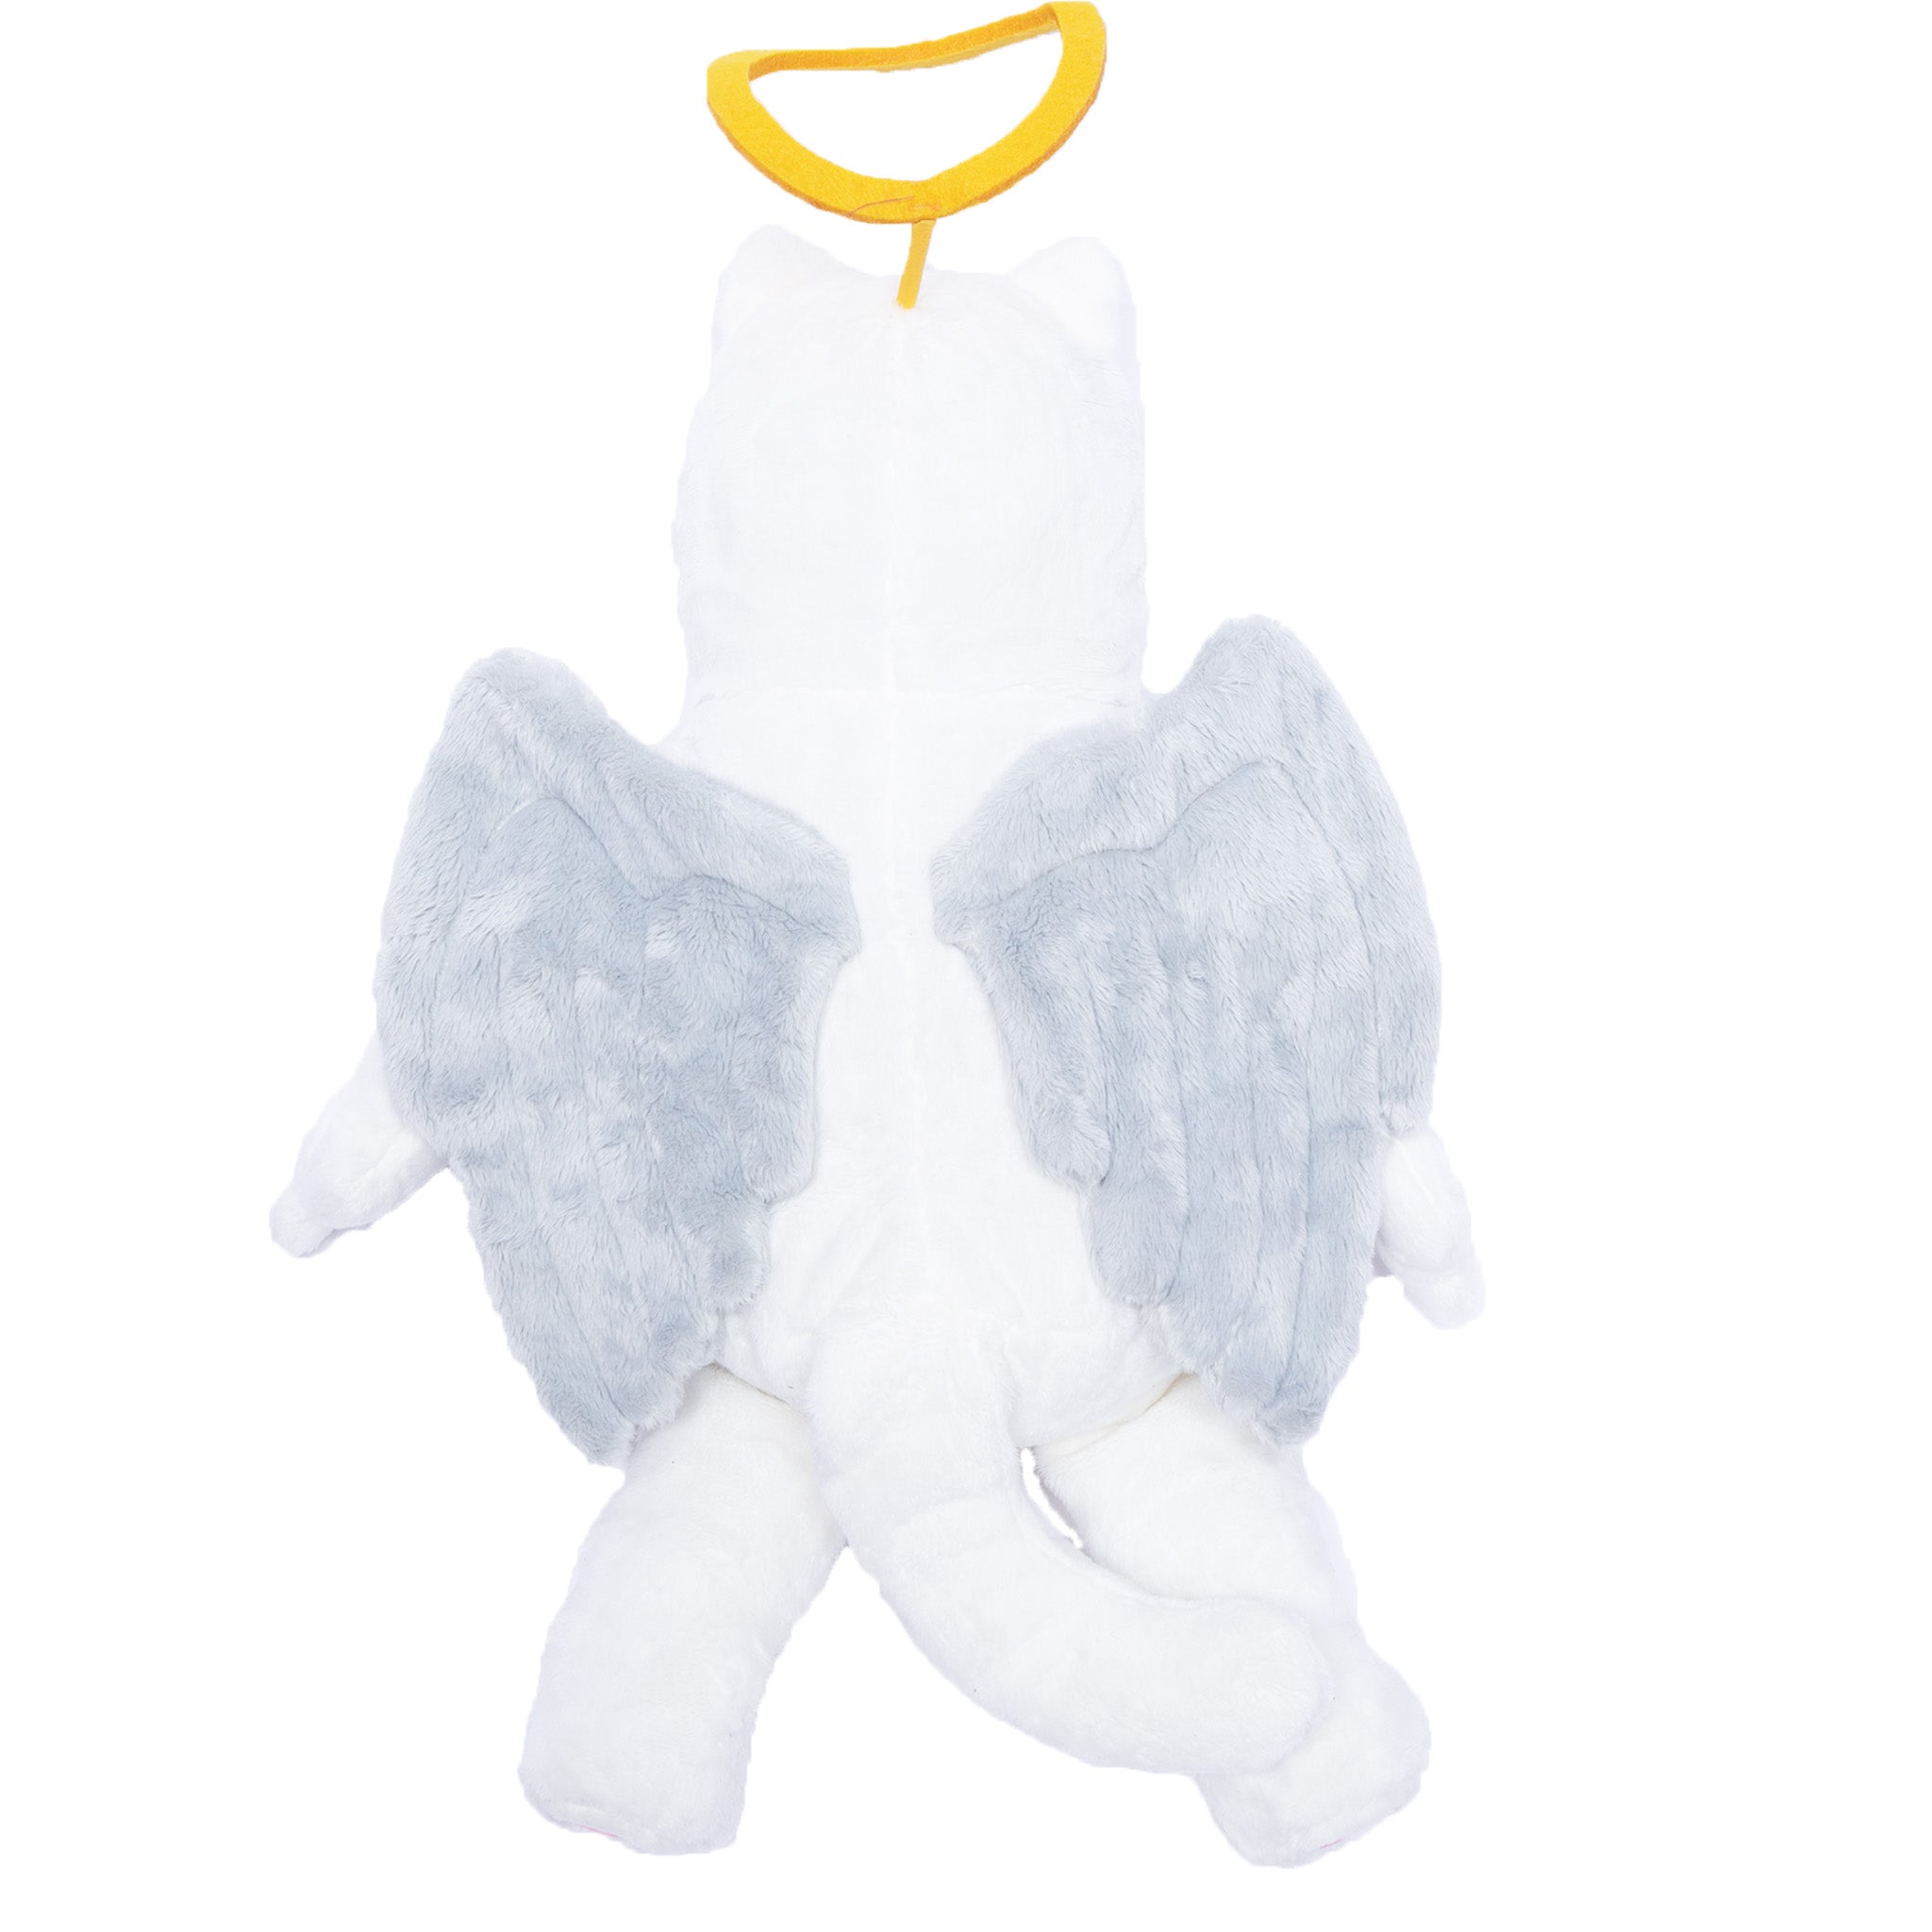 Angel Nerm Plush Toy